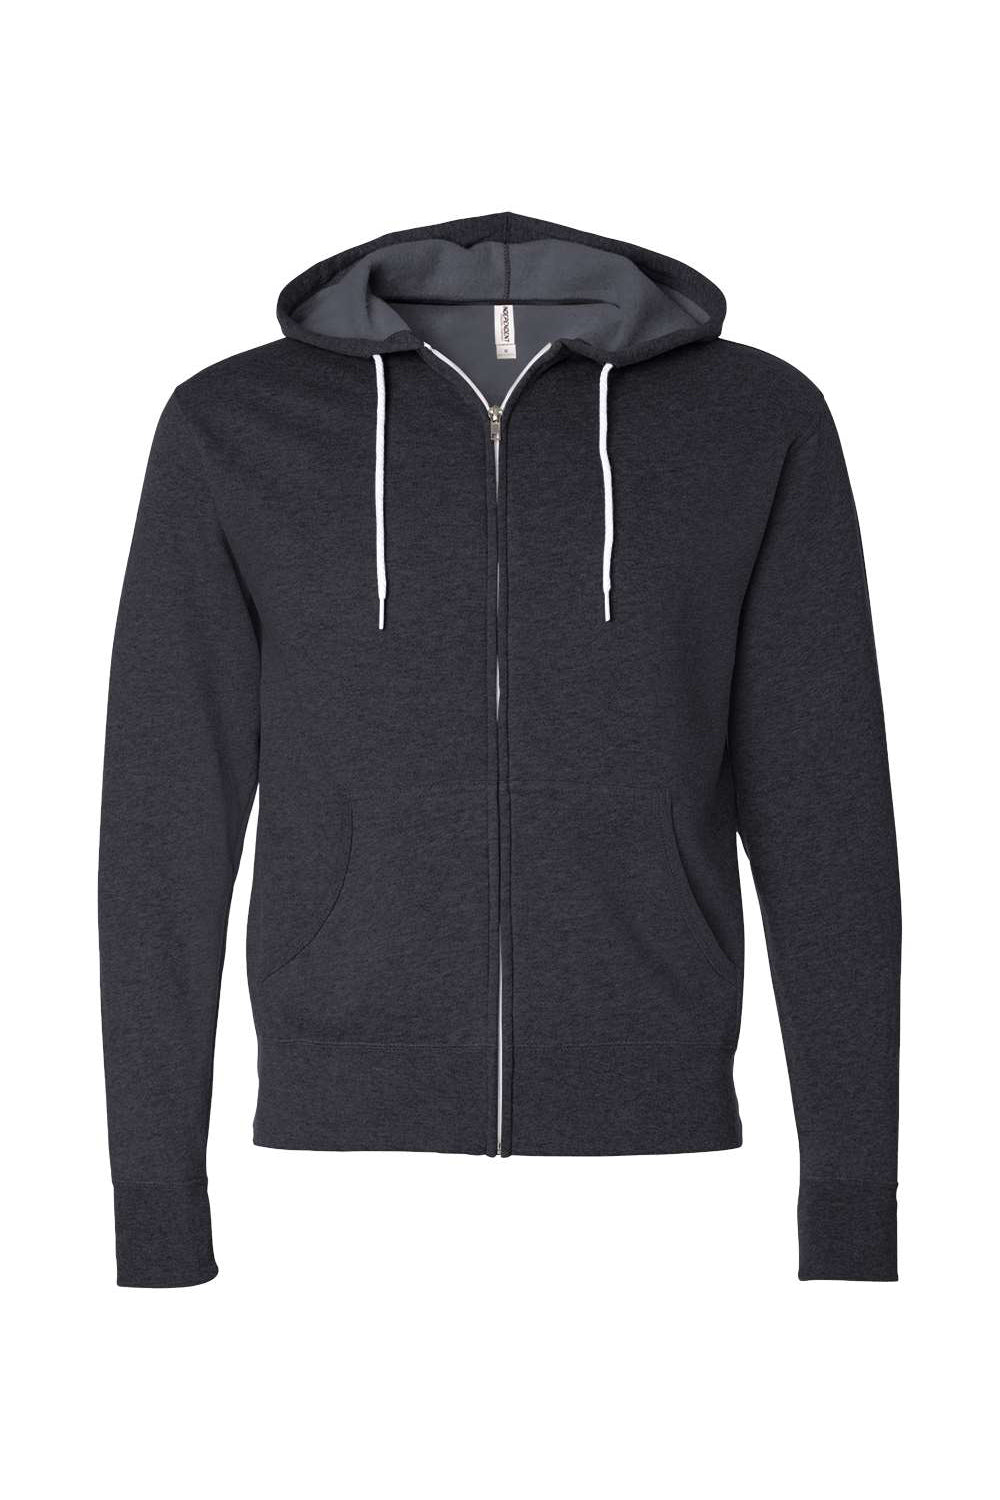 Independent Trading Co. AFX90UNZ Mens Full Zip Hooded Sweatshirt Hoodie Heather Charcoal Grey Flat Front